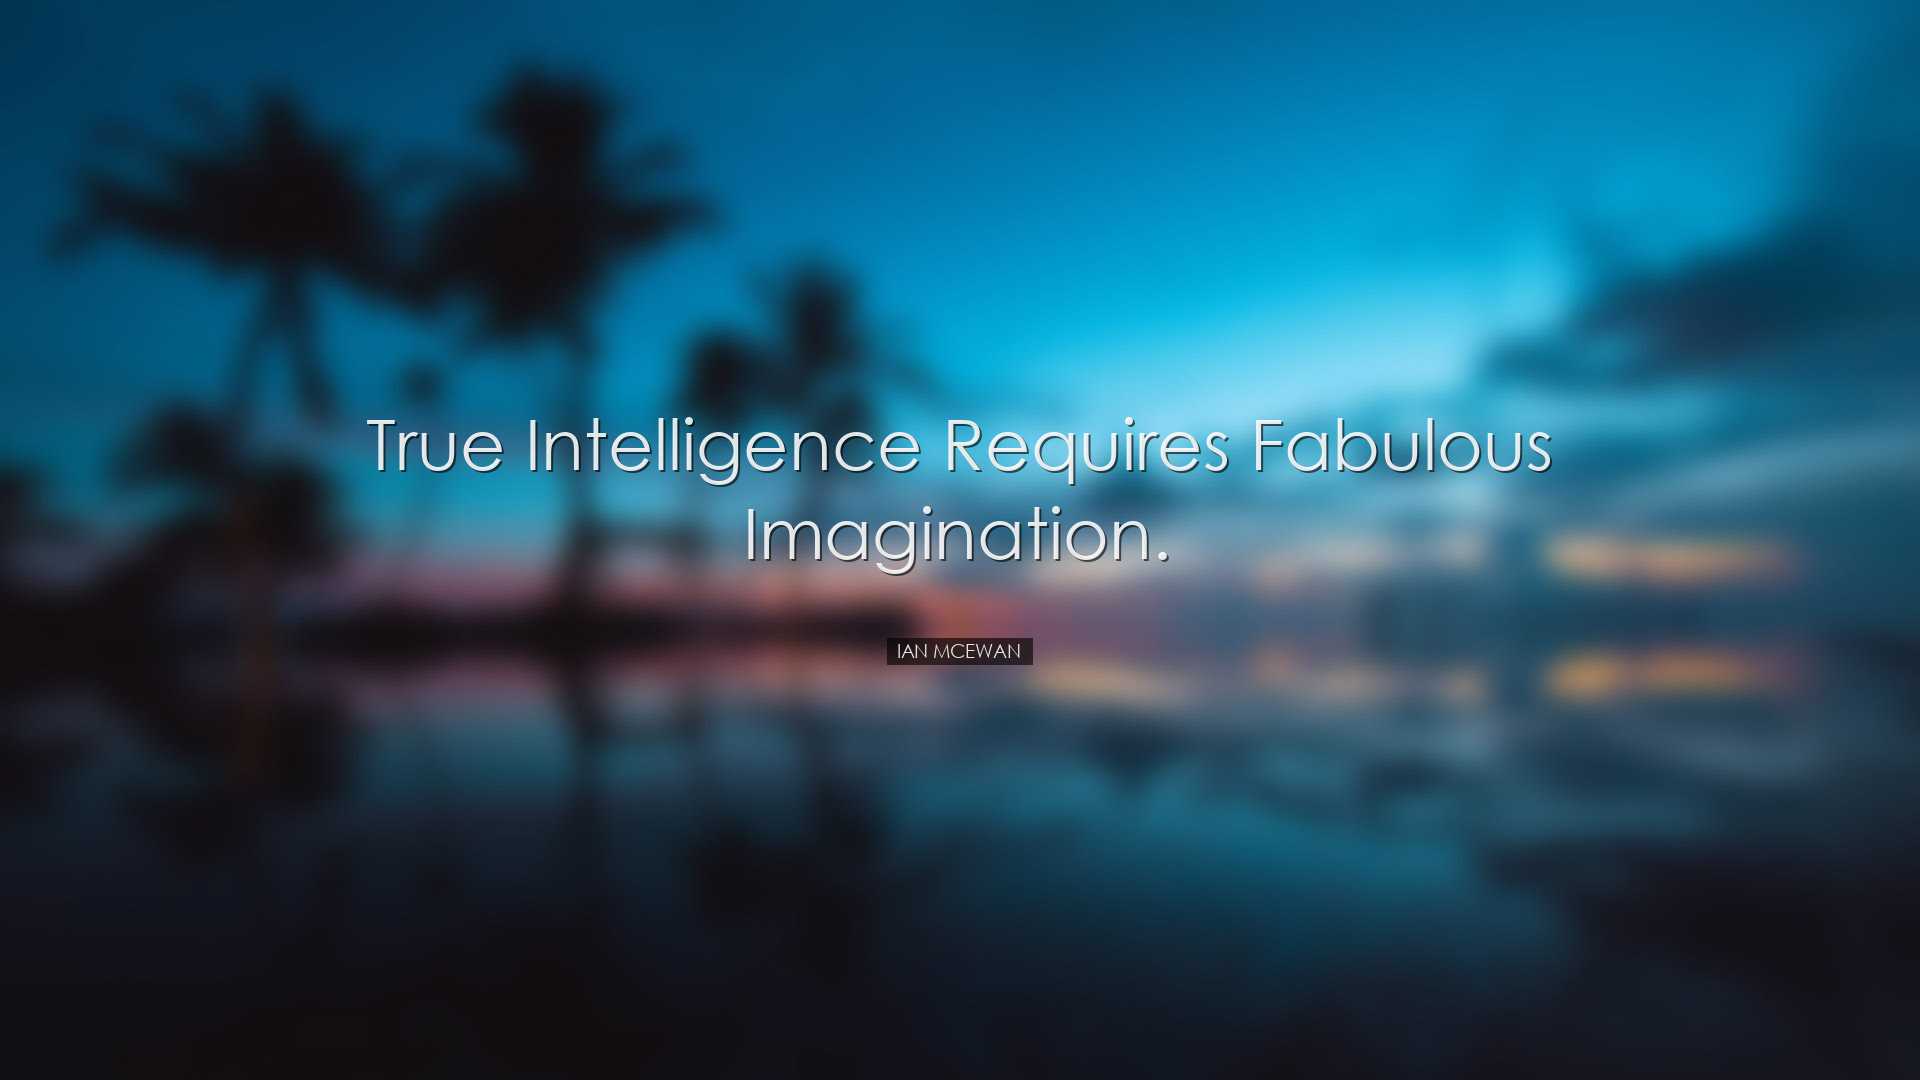 True intelligence requires fabulous imagination. - Ian Mcewan